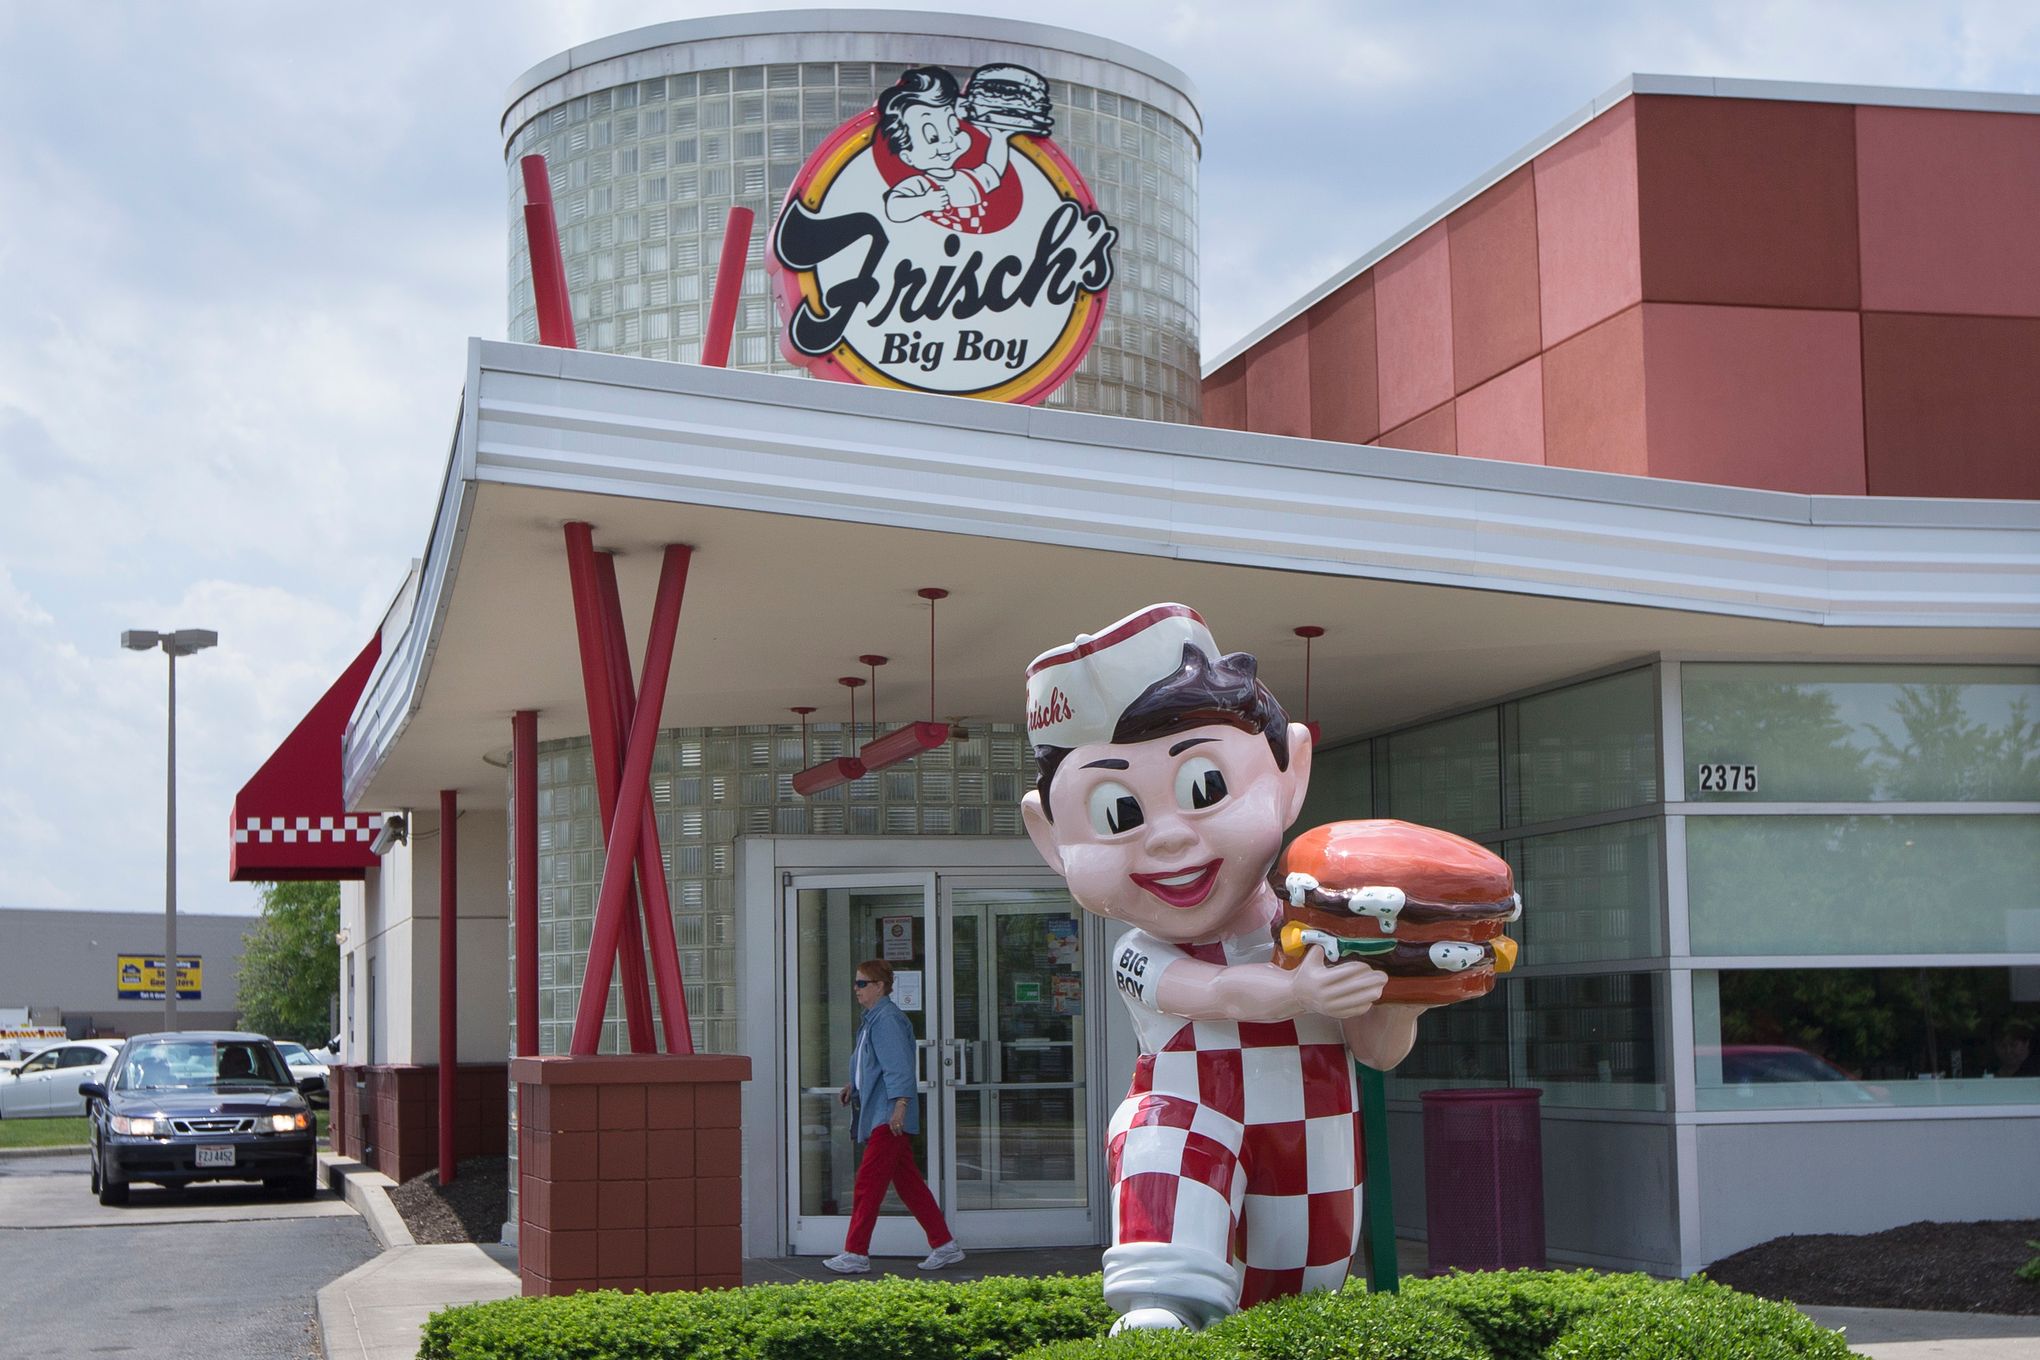 Home of Burgers, Breakfast, & Big Boy, Frisch's Big Boy